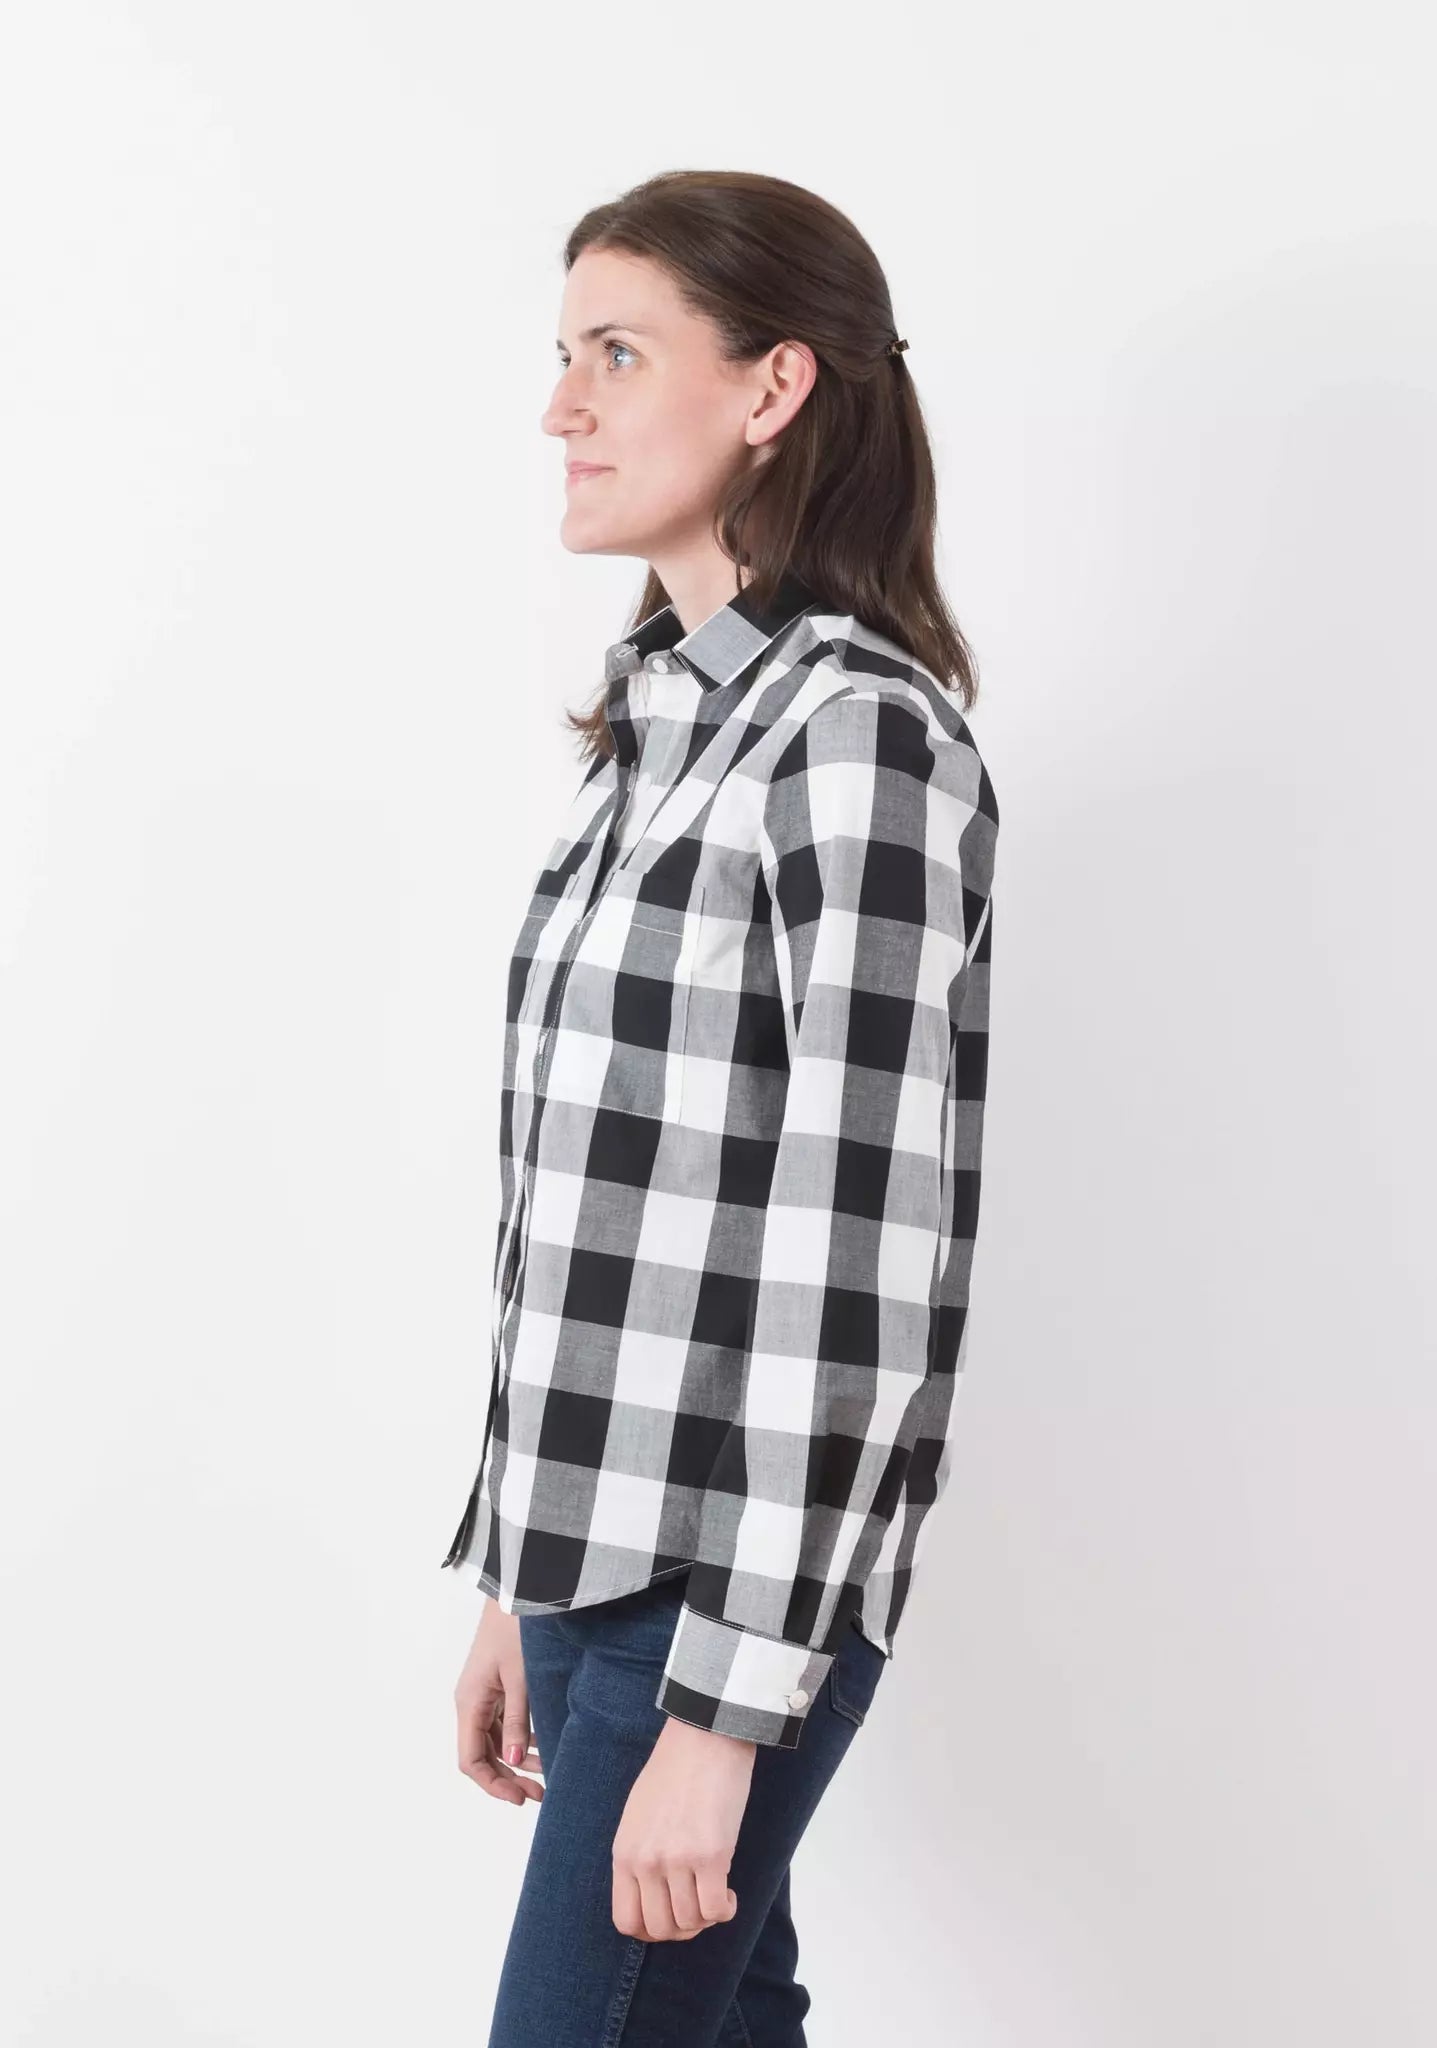 Grainline Pattern - Archer Shirt | Core Fabrics